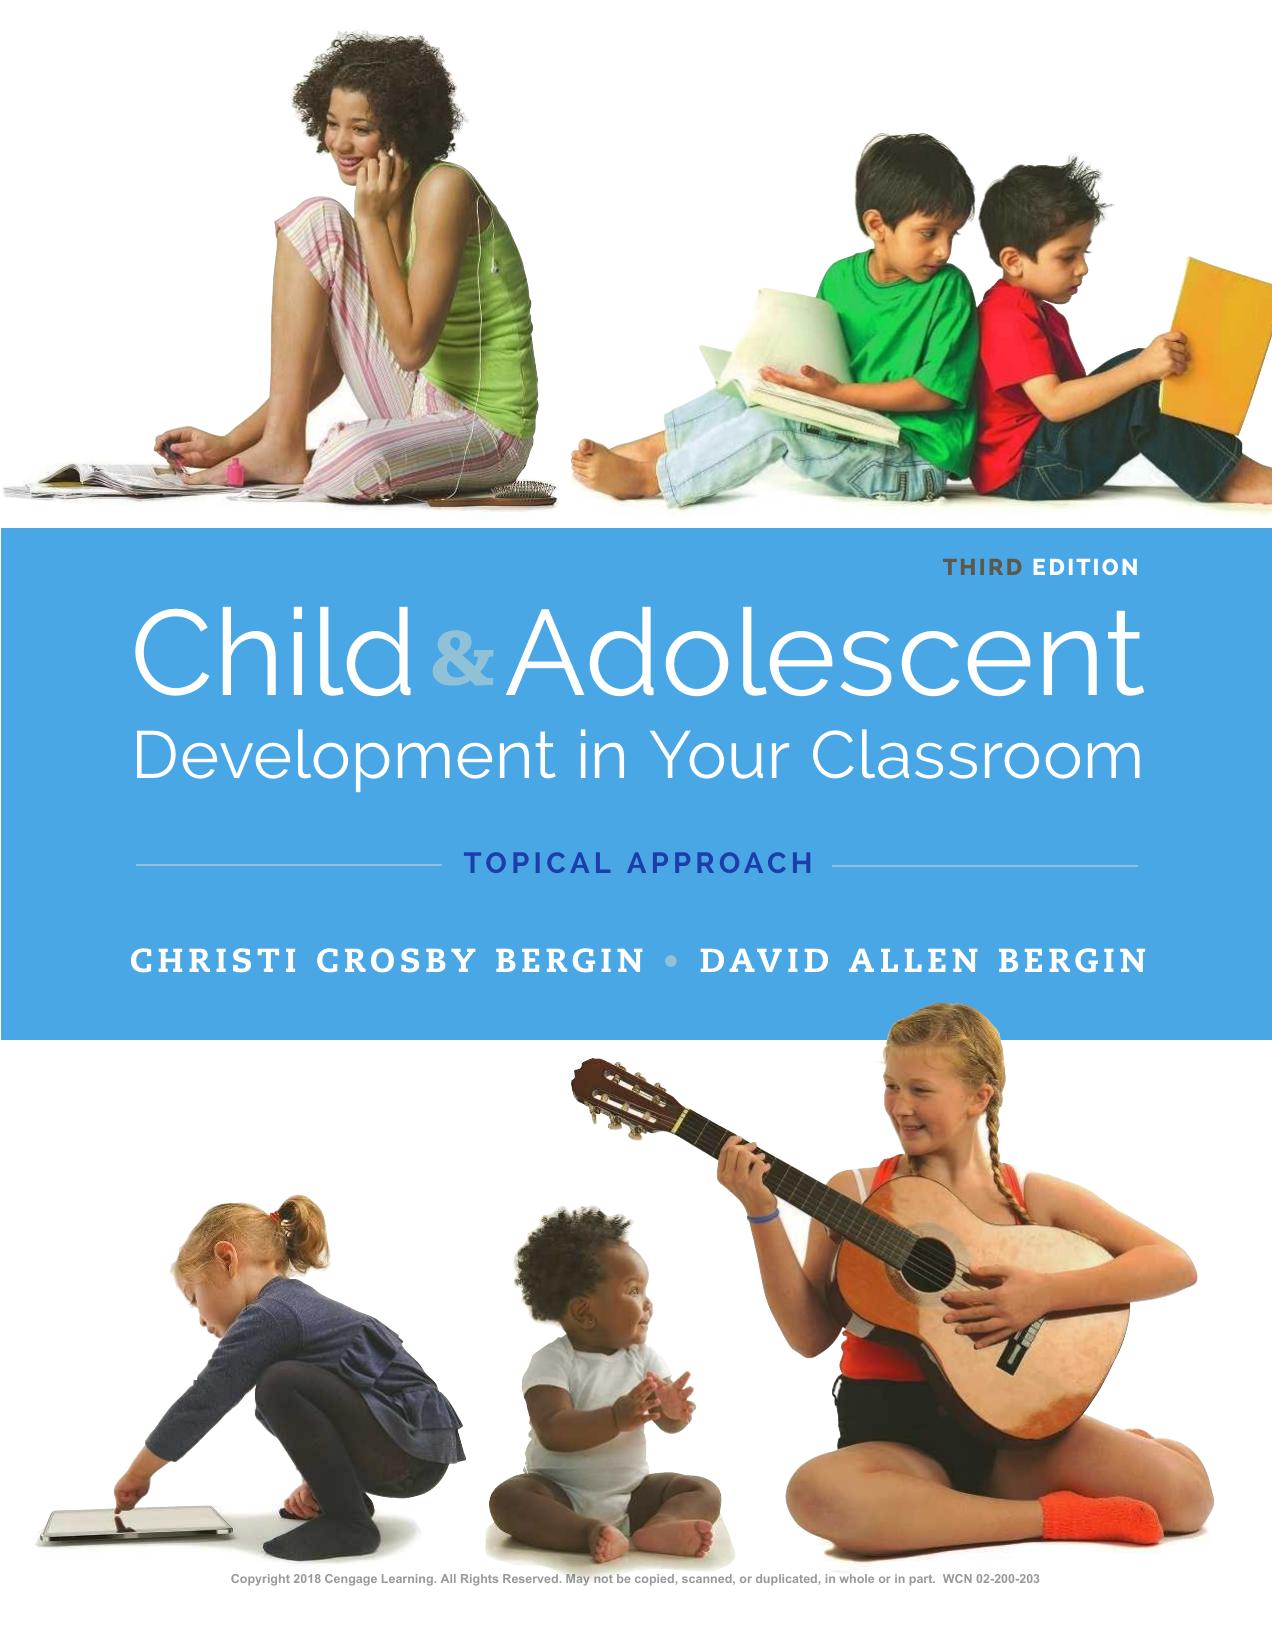 Child and Adolescent Development in Your Classroom 3rd - Christi Crosby Bergin & David Allen Bergin.jpg